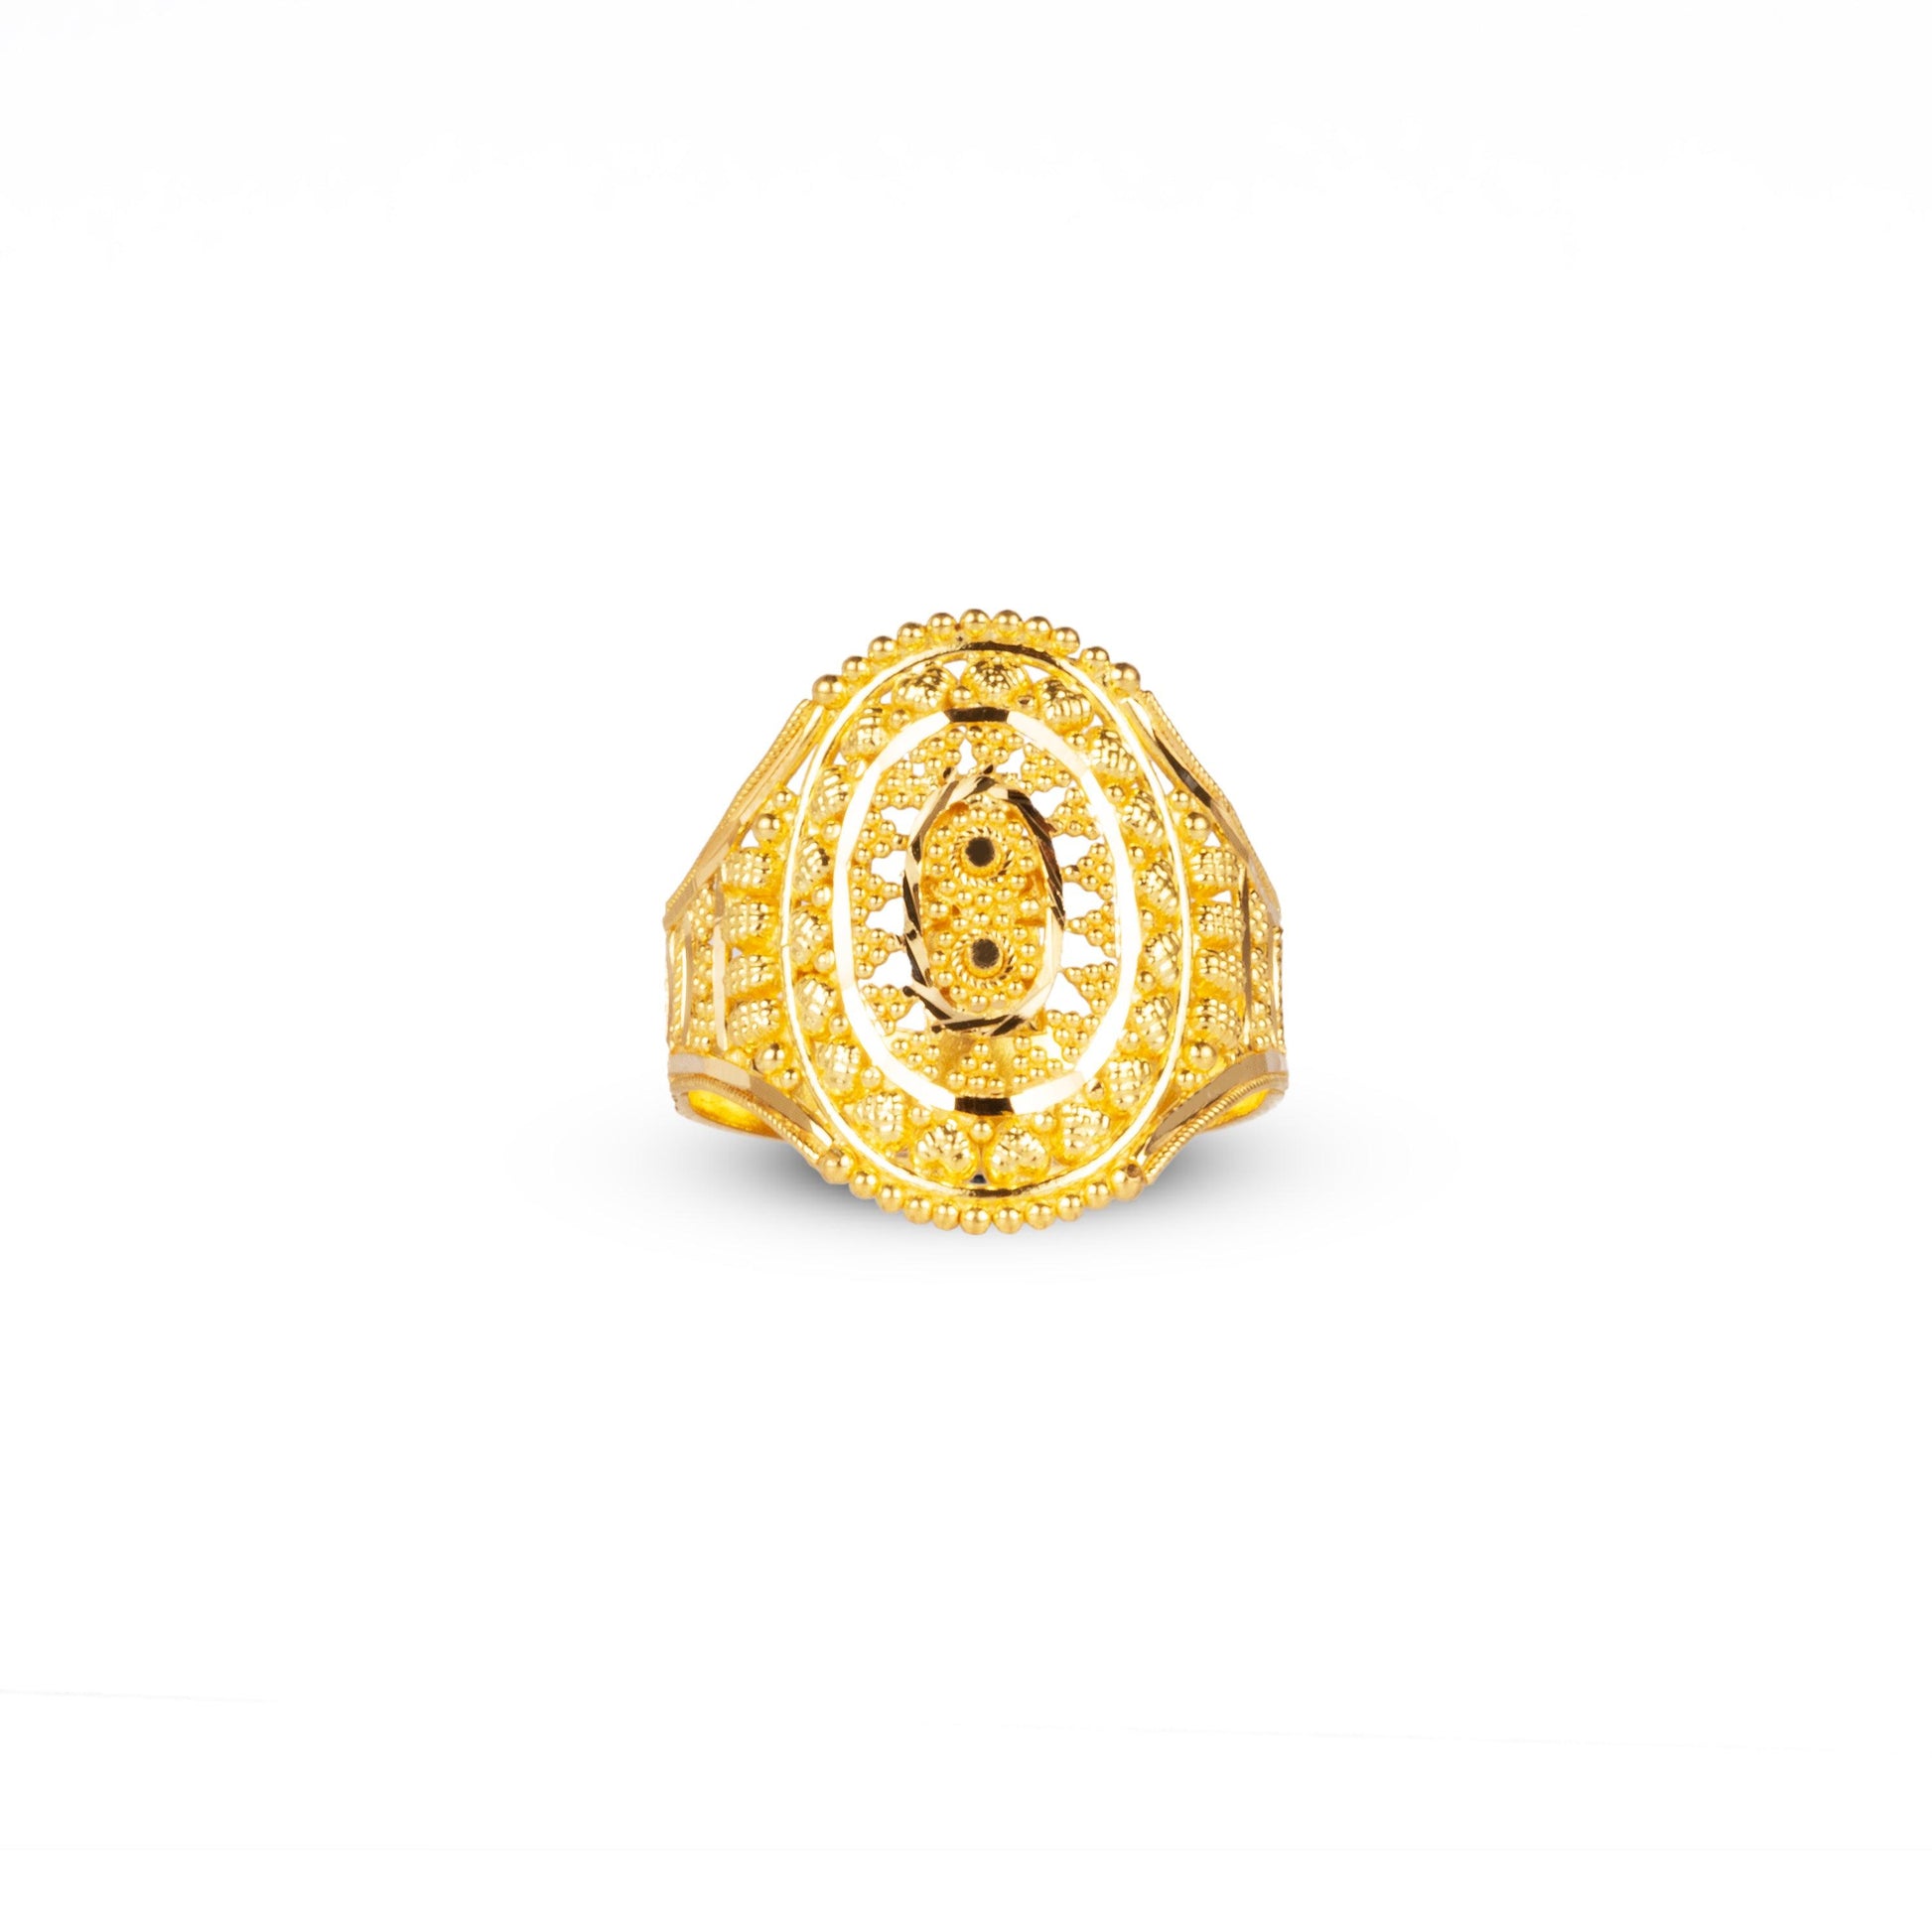 22ct Gold Filigree Design Ring LR-6639 - Minar Jewellers